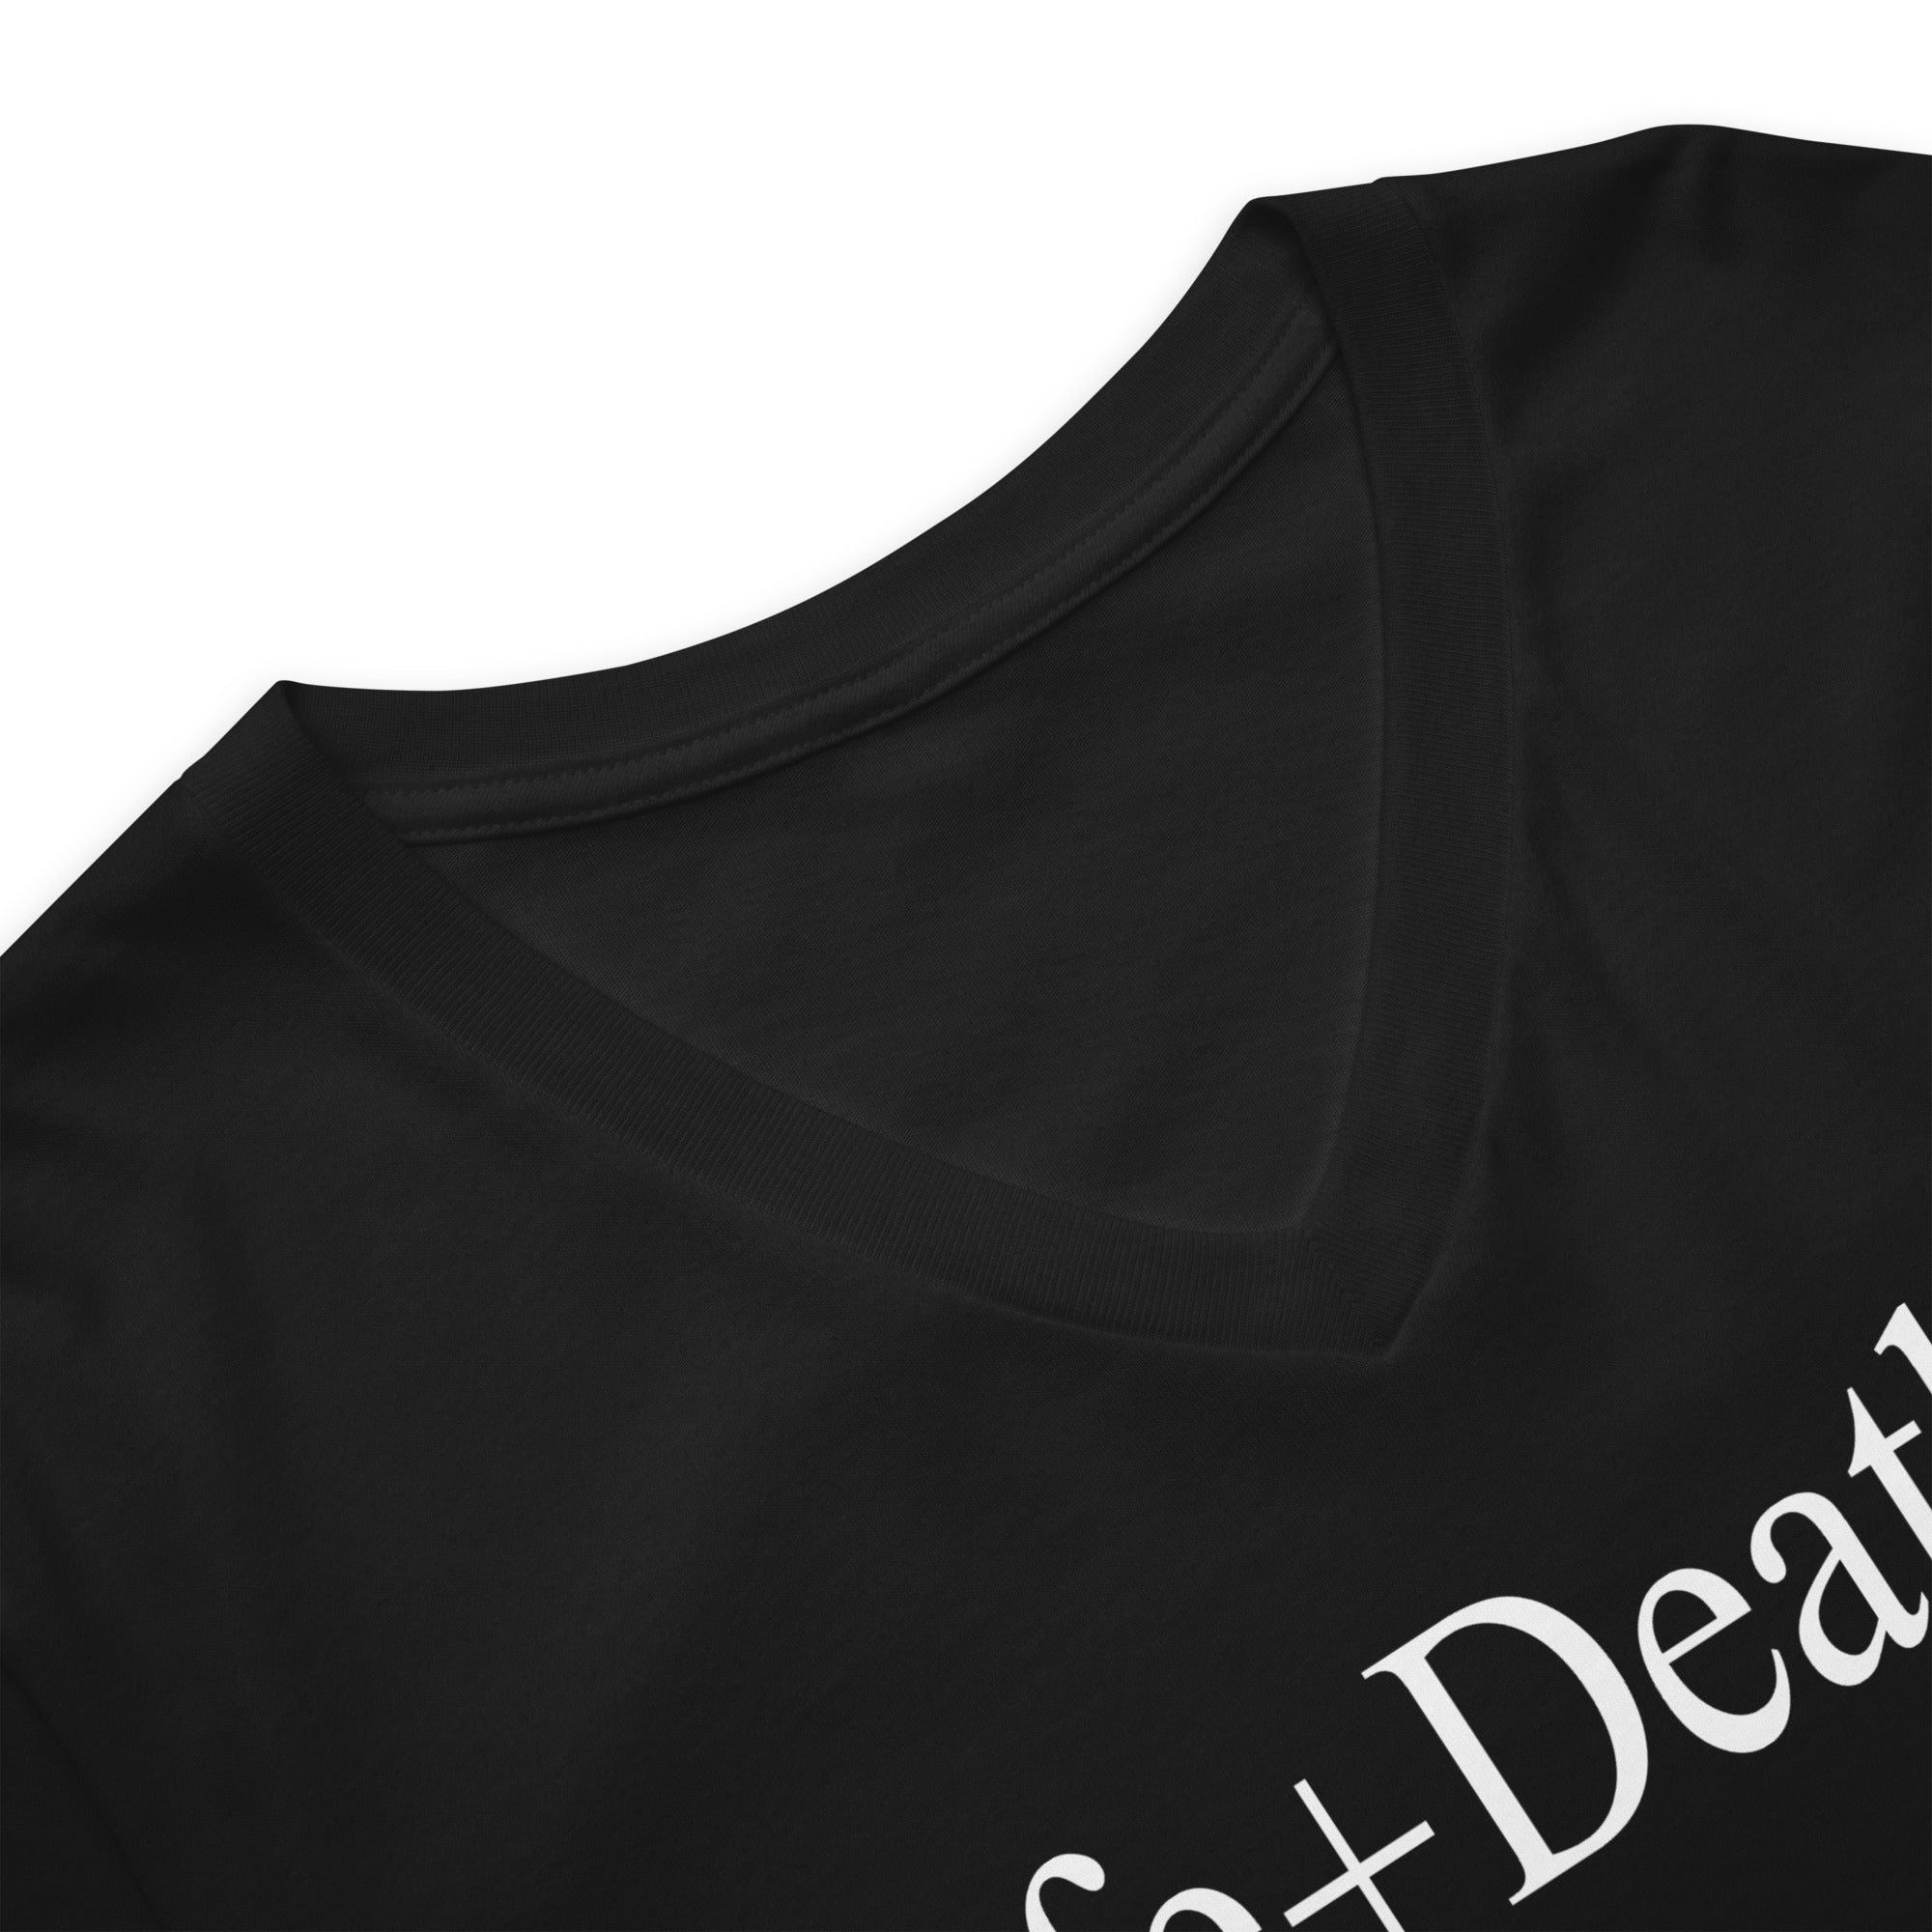 Life + Death = ? Gothic Deathrock Style Women’s Short Sleeve V-Neck T-Shirt - Edge of Life Designs